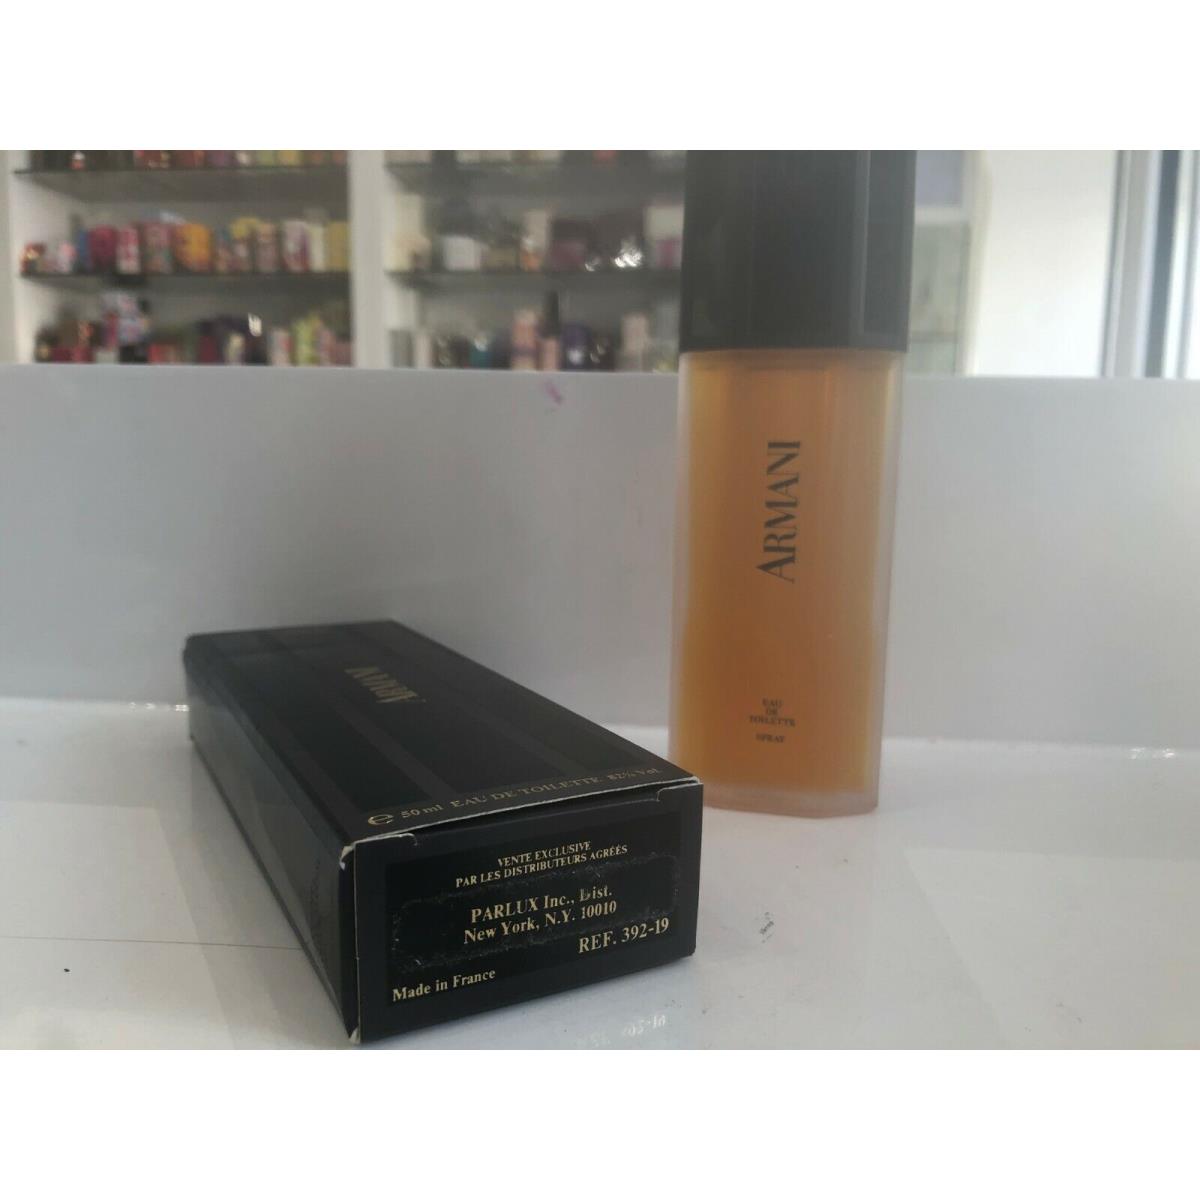 Giorgio Armani perfume,cologne,fragrance,parfum  2